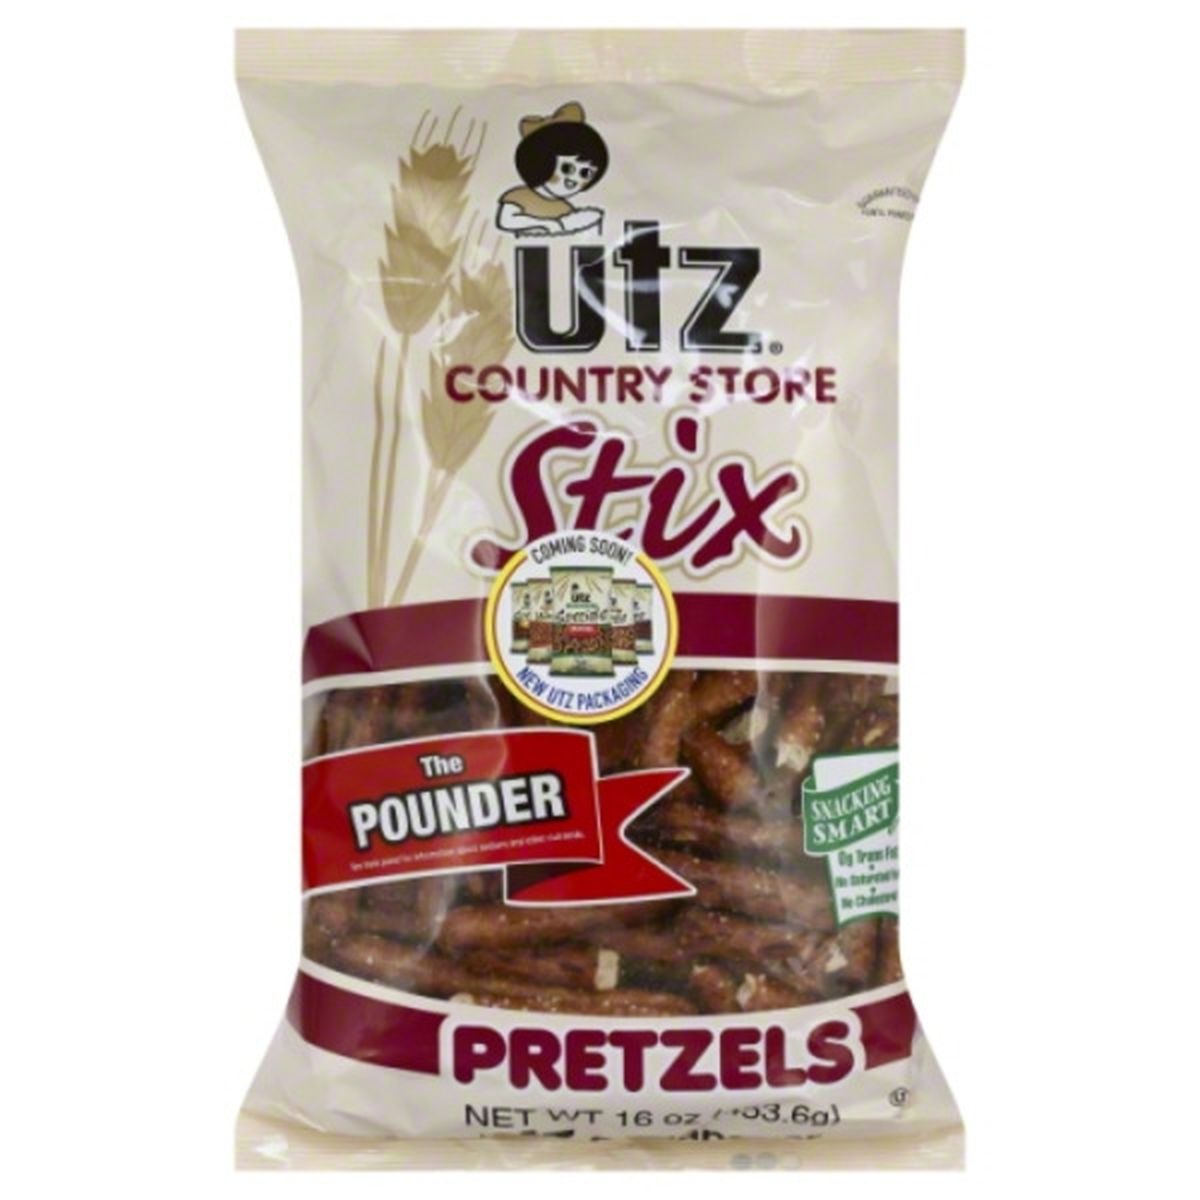 Calories in Utz Pretzels, Country Store Stix, the Pounder